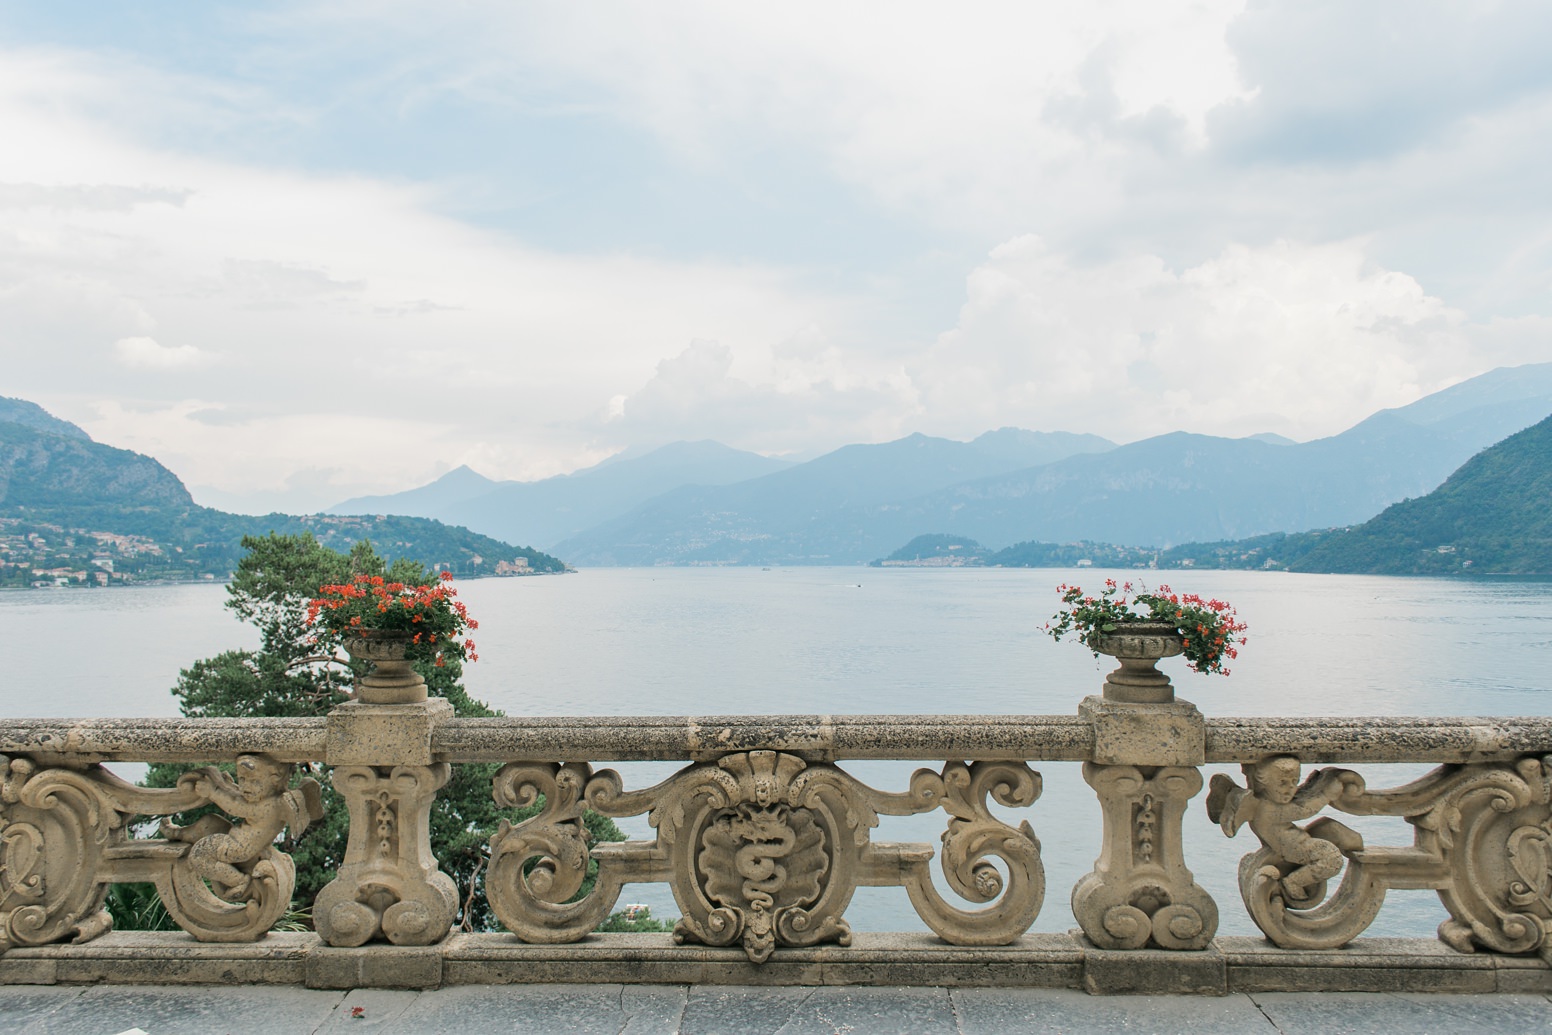 View from balcony at Villa Balbianello Lake Como